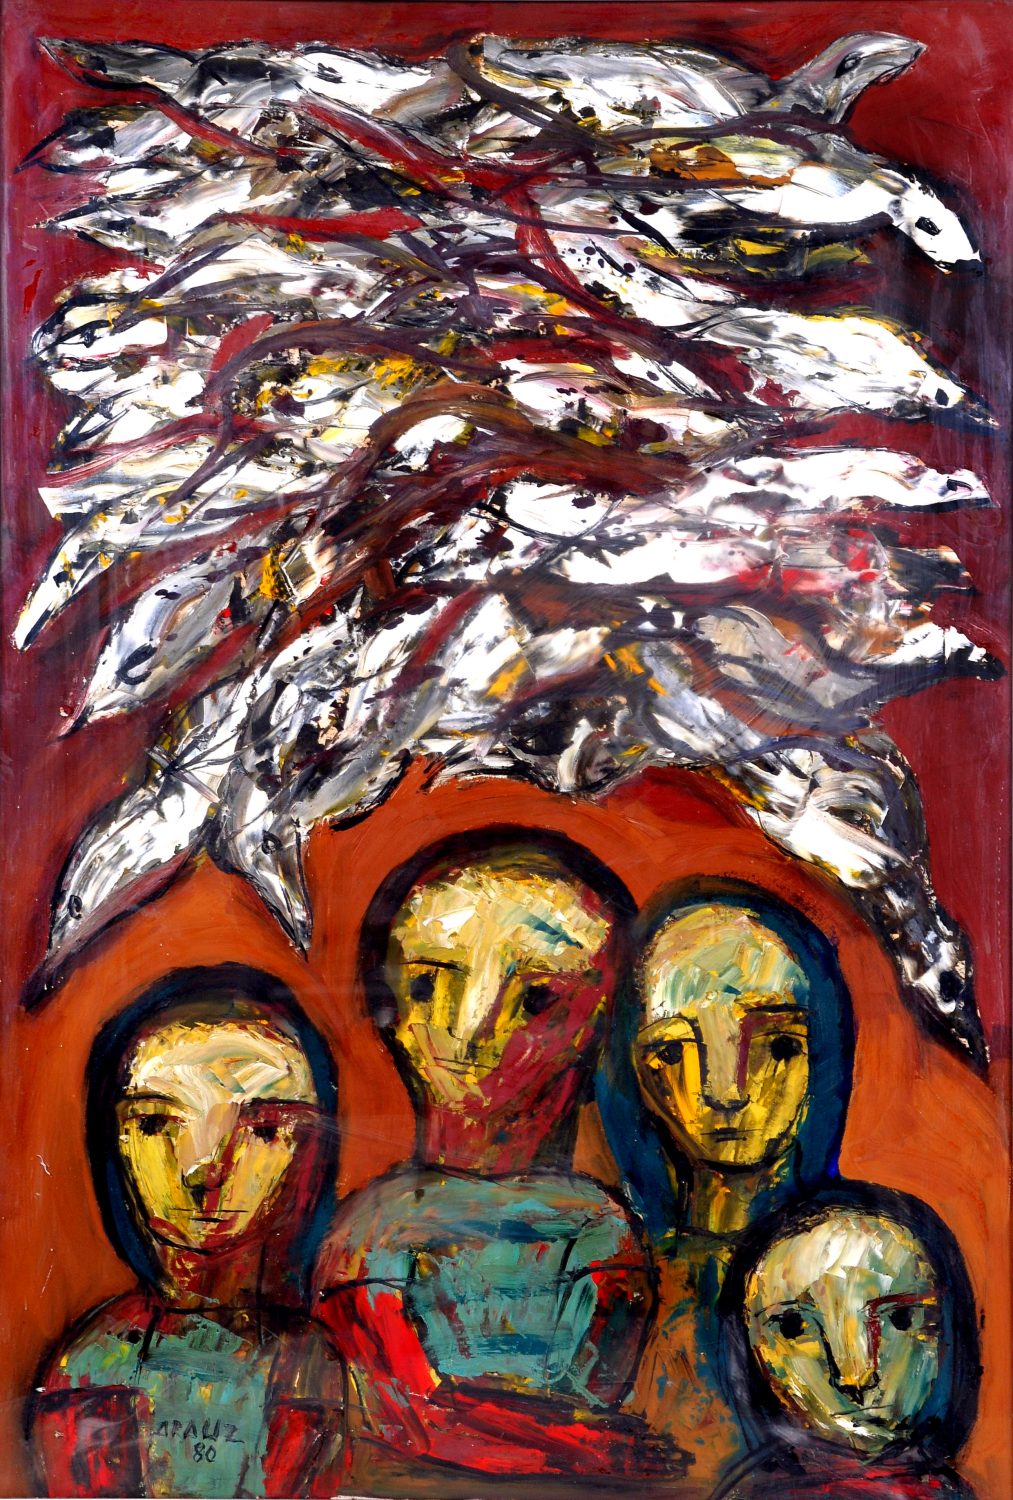 thumbnail of Untitled work by Ecuadorian artist Félix Arauz. medium: oil on canvas. Dimensions: 41 x 28 inches. date: 1980